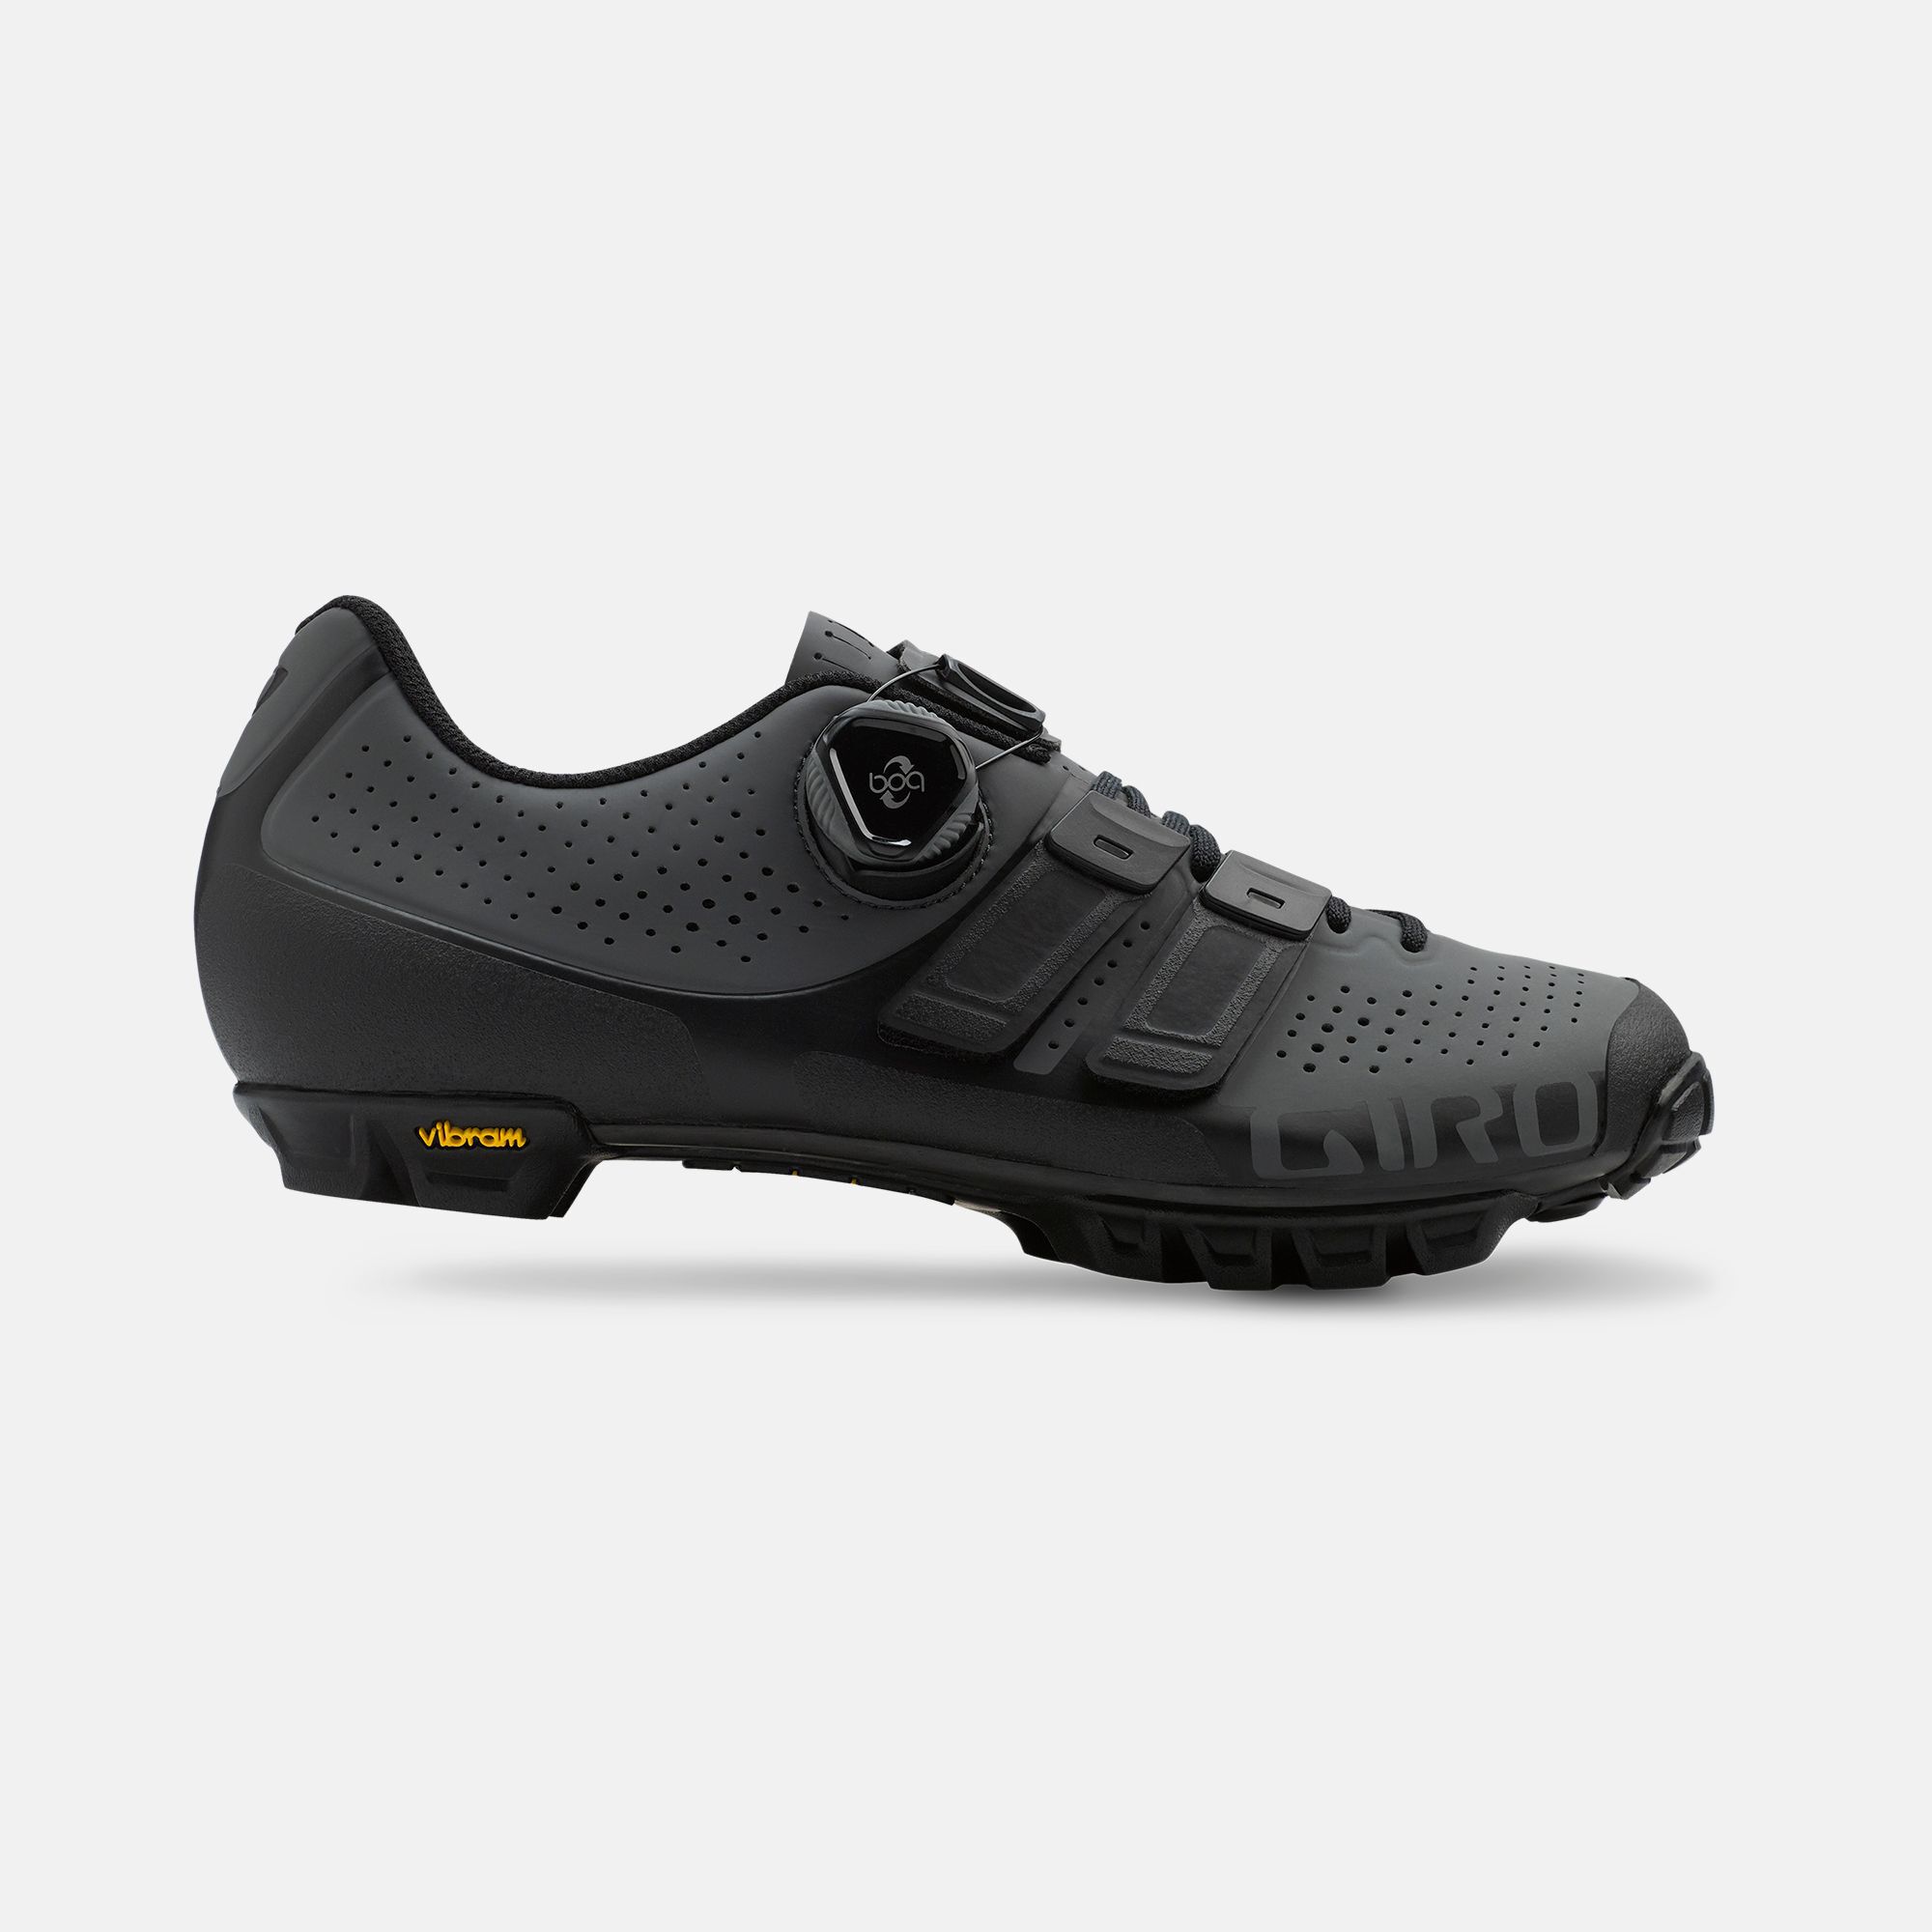 Giro Men's Terraduro Mountain Biking Shoes Size 13.5 US 48 EU Blue/Black New 